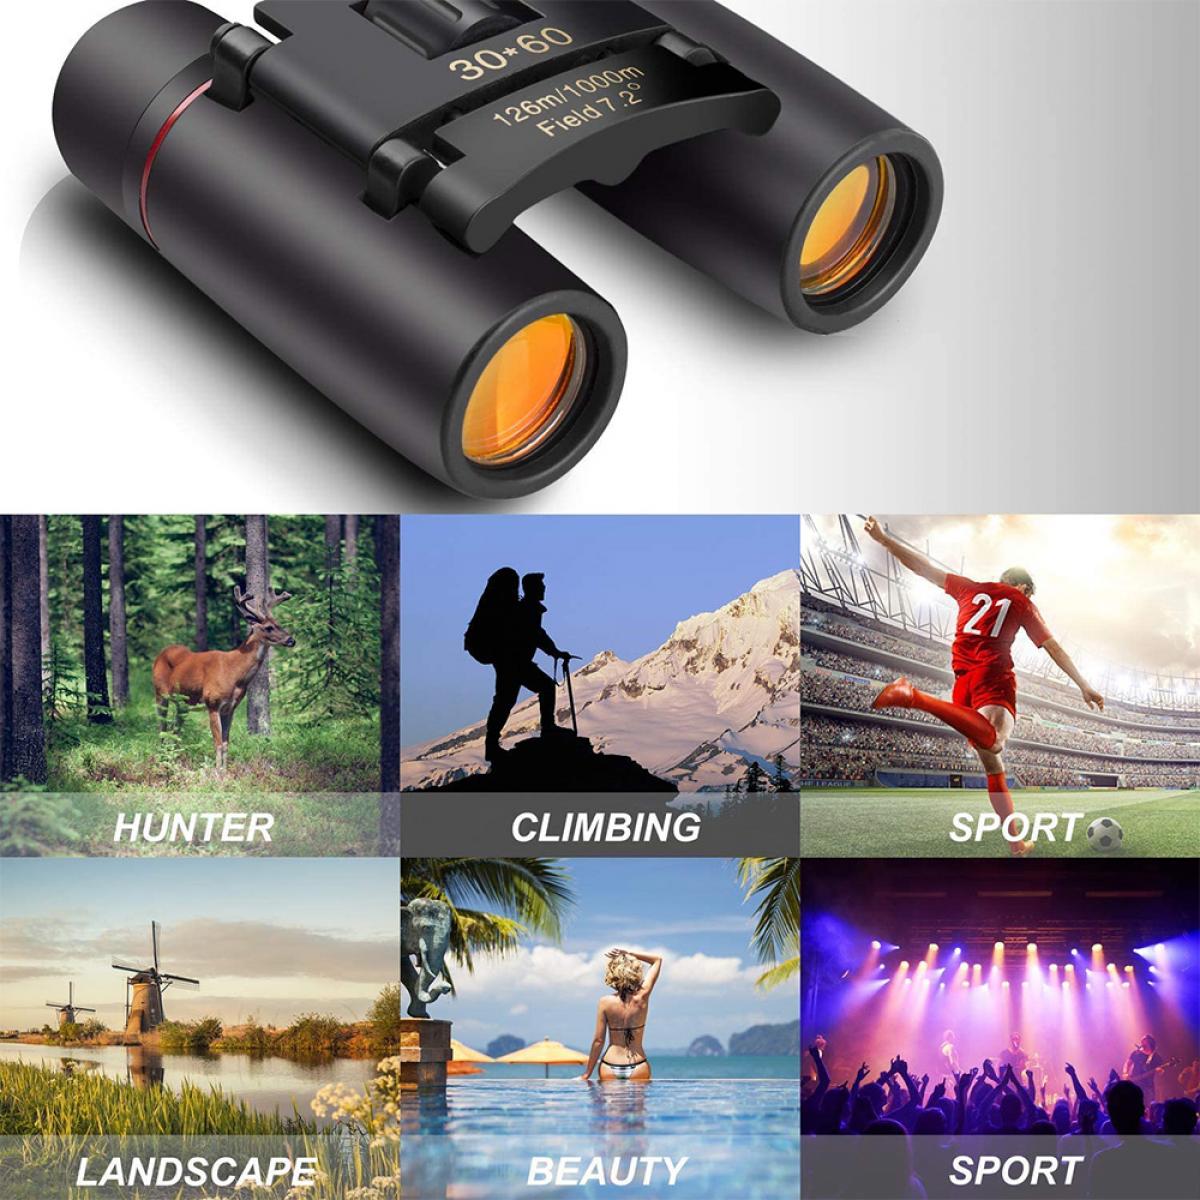 Mini Pocket Size Compact Binoculars 4 X 30 mm Sports,Racing,Bird Watching New. 